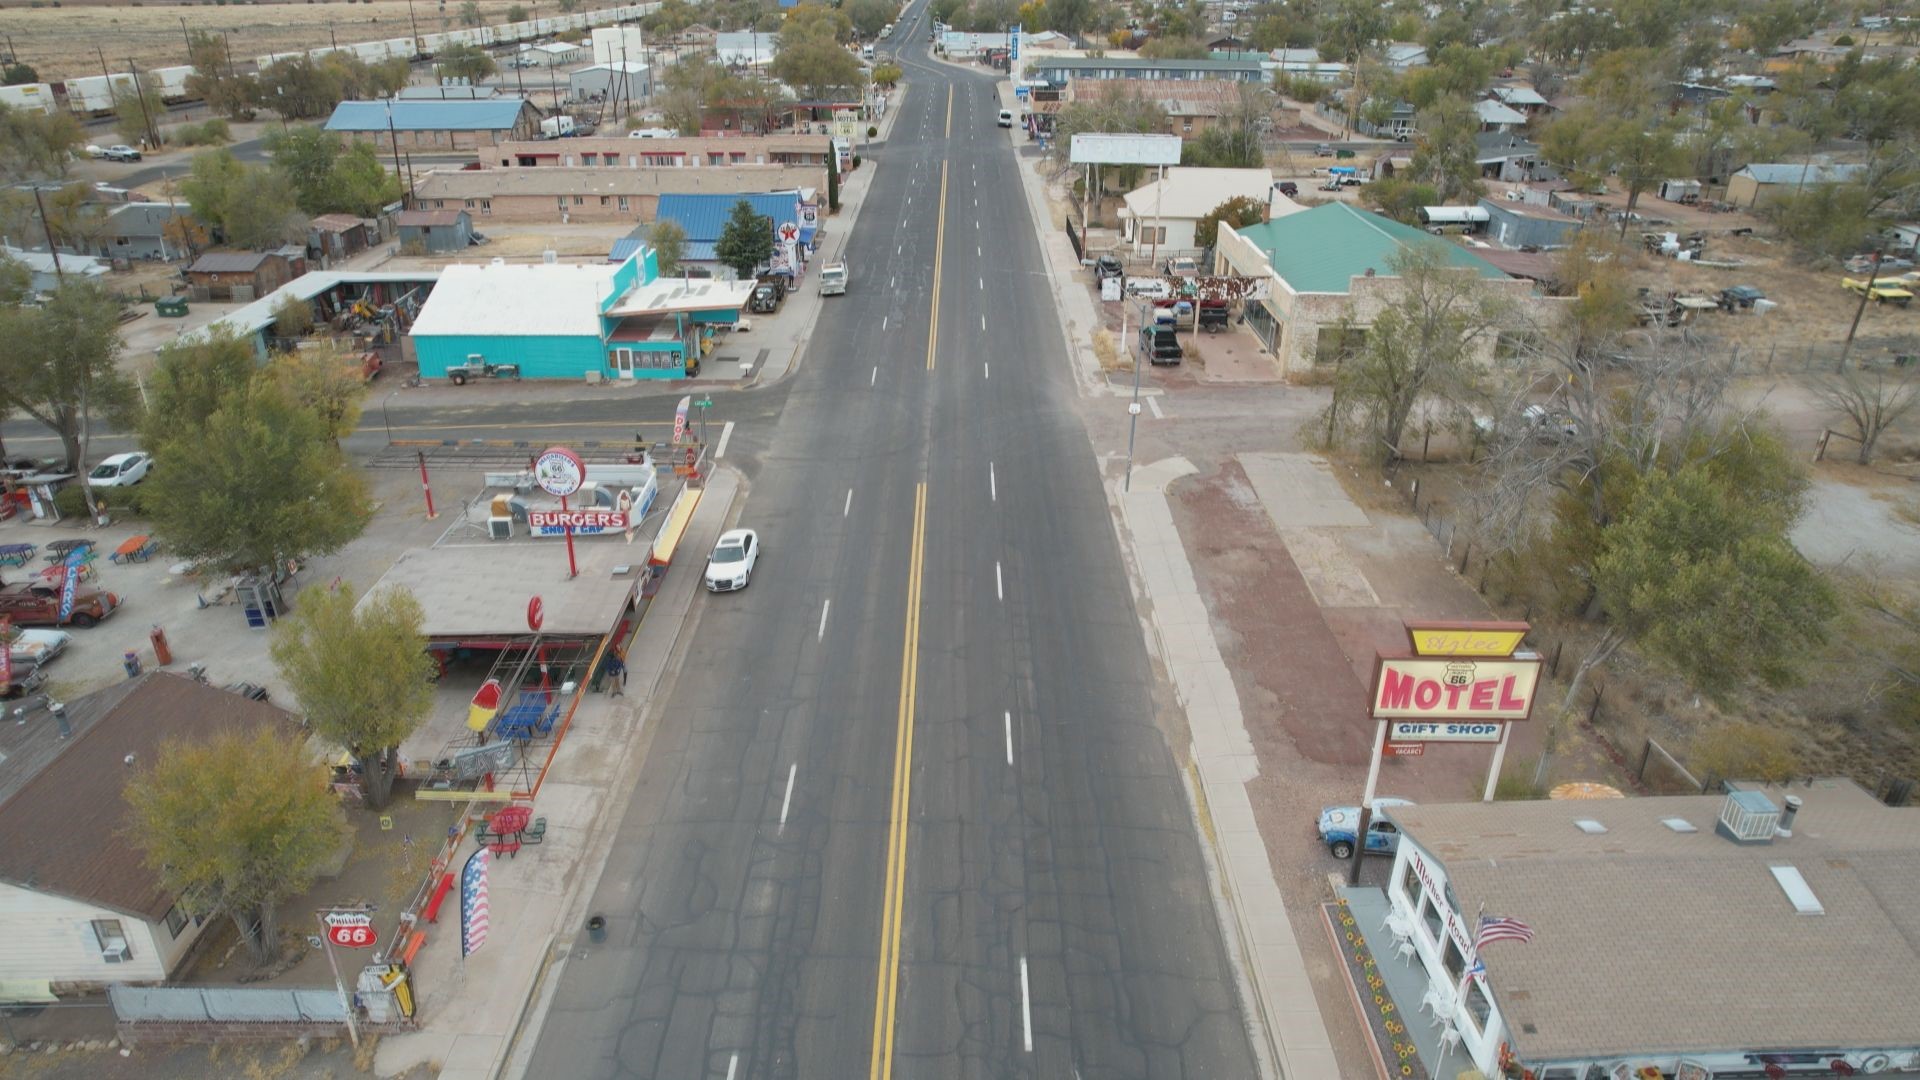 Arizona Route 66 restaurant 'Snow Cap' receives national grant | 12news.com